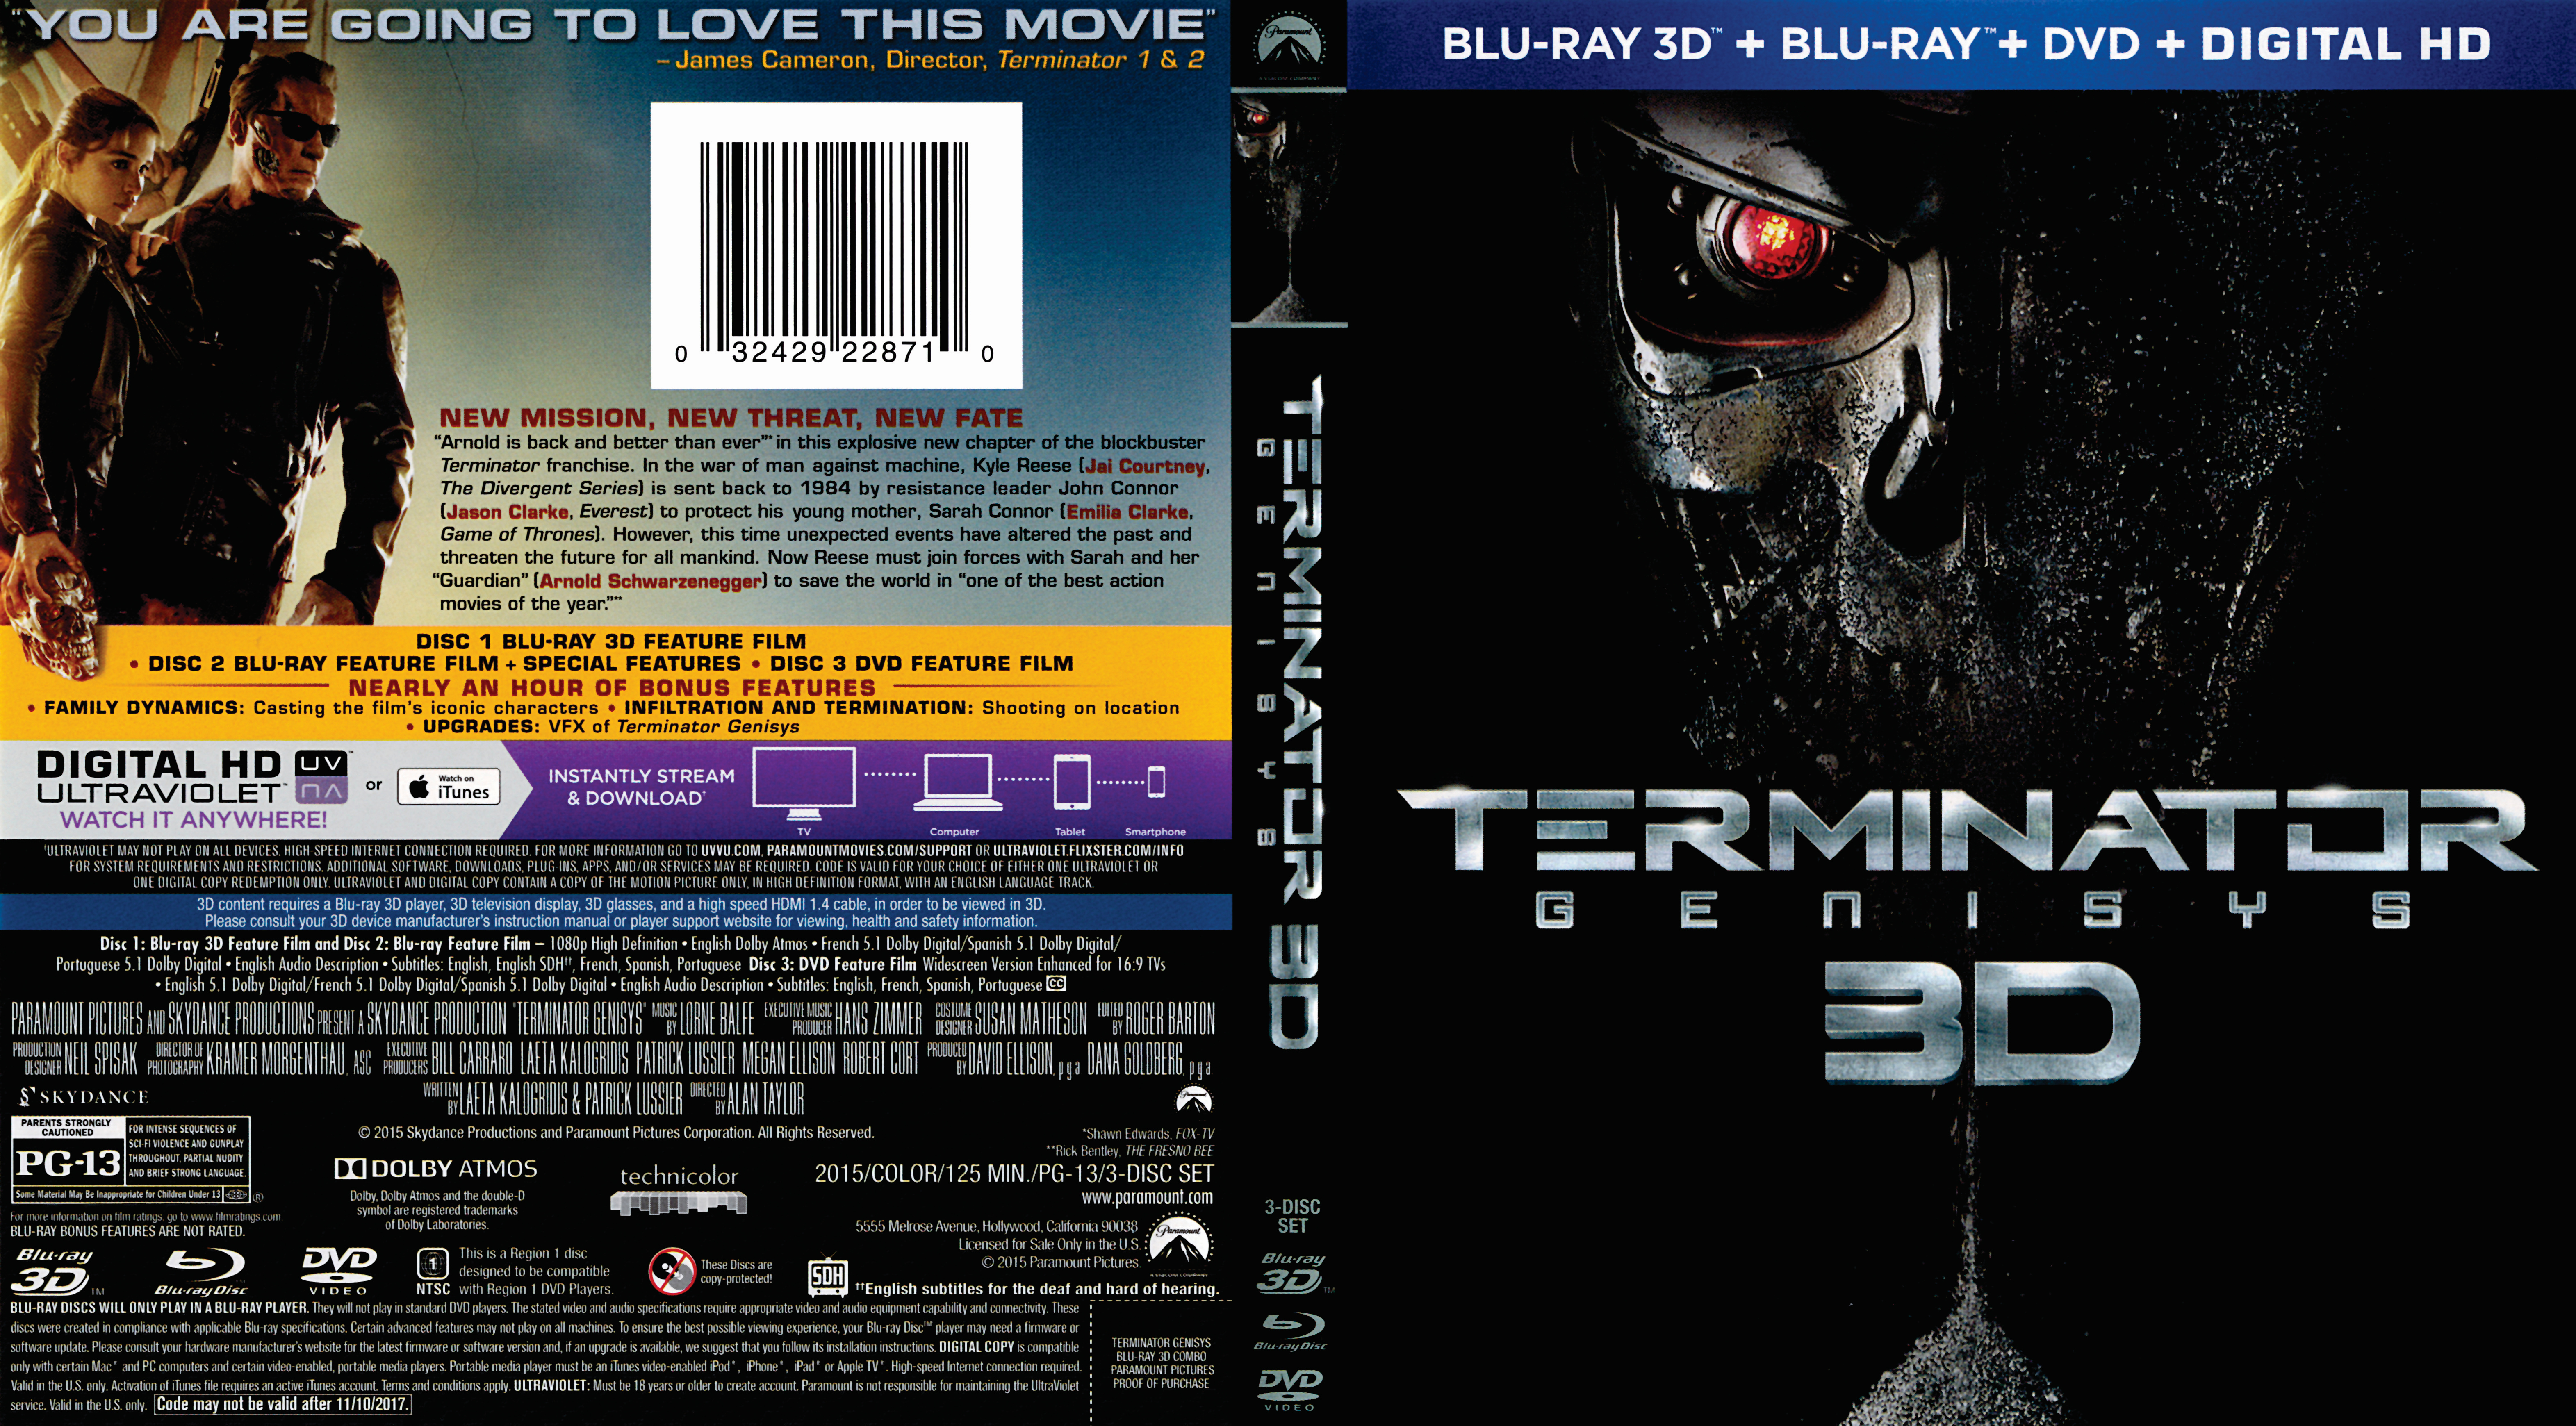 Jaquette DVD Terminator 3D Zone 1 (BLU-RAY)